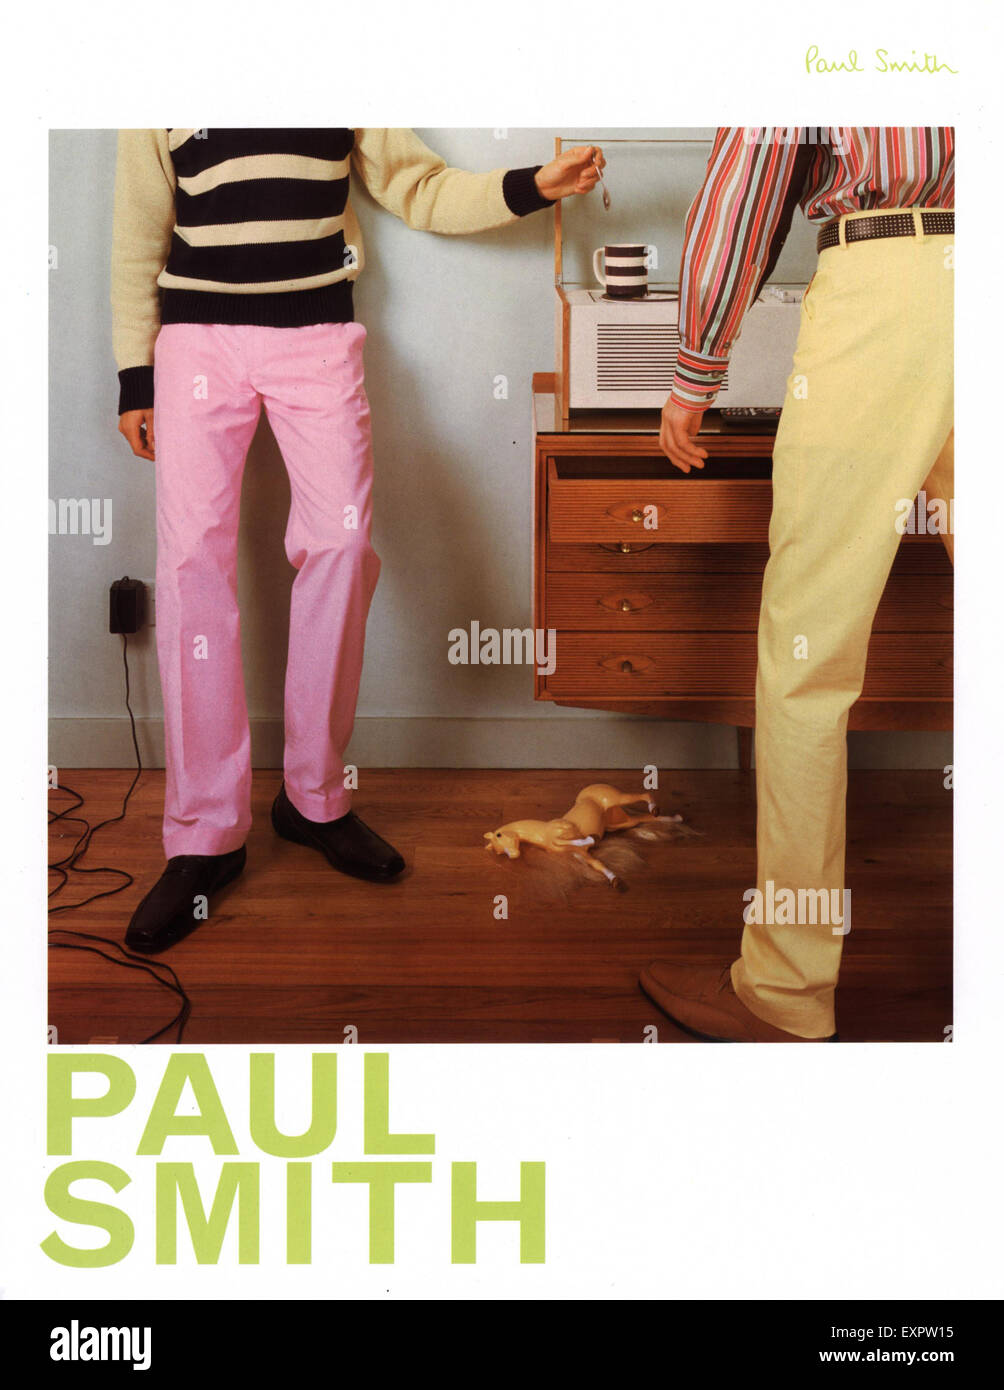 2000s UK Paul Smith Magazine Advert Stock Photo